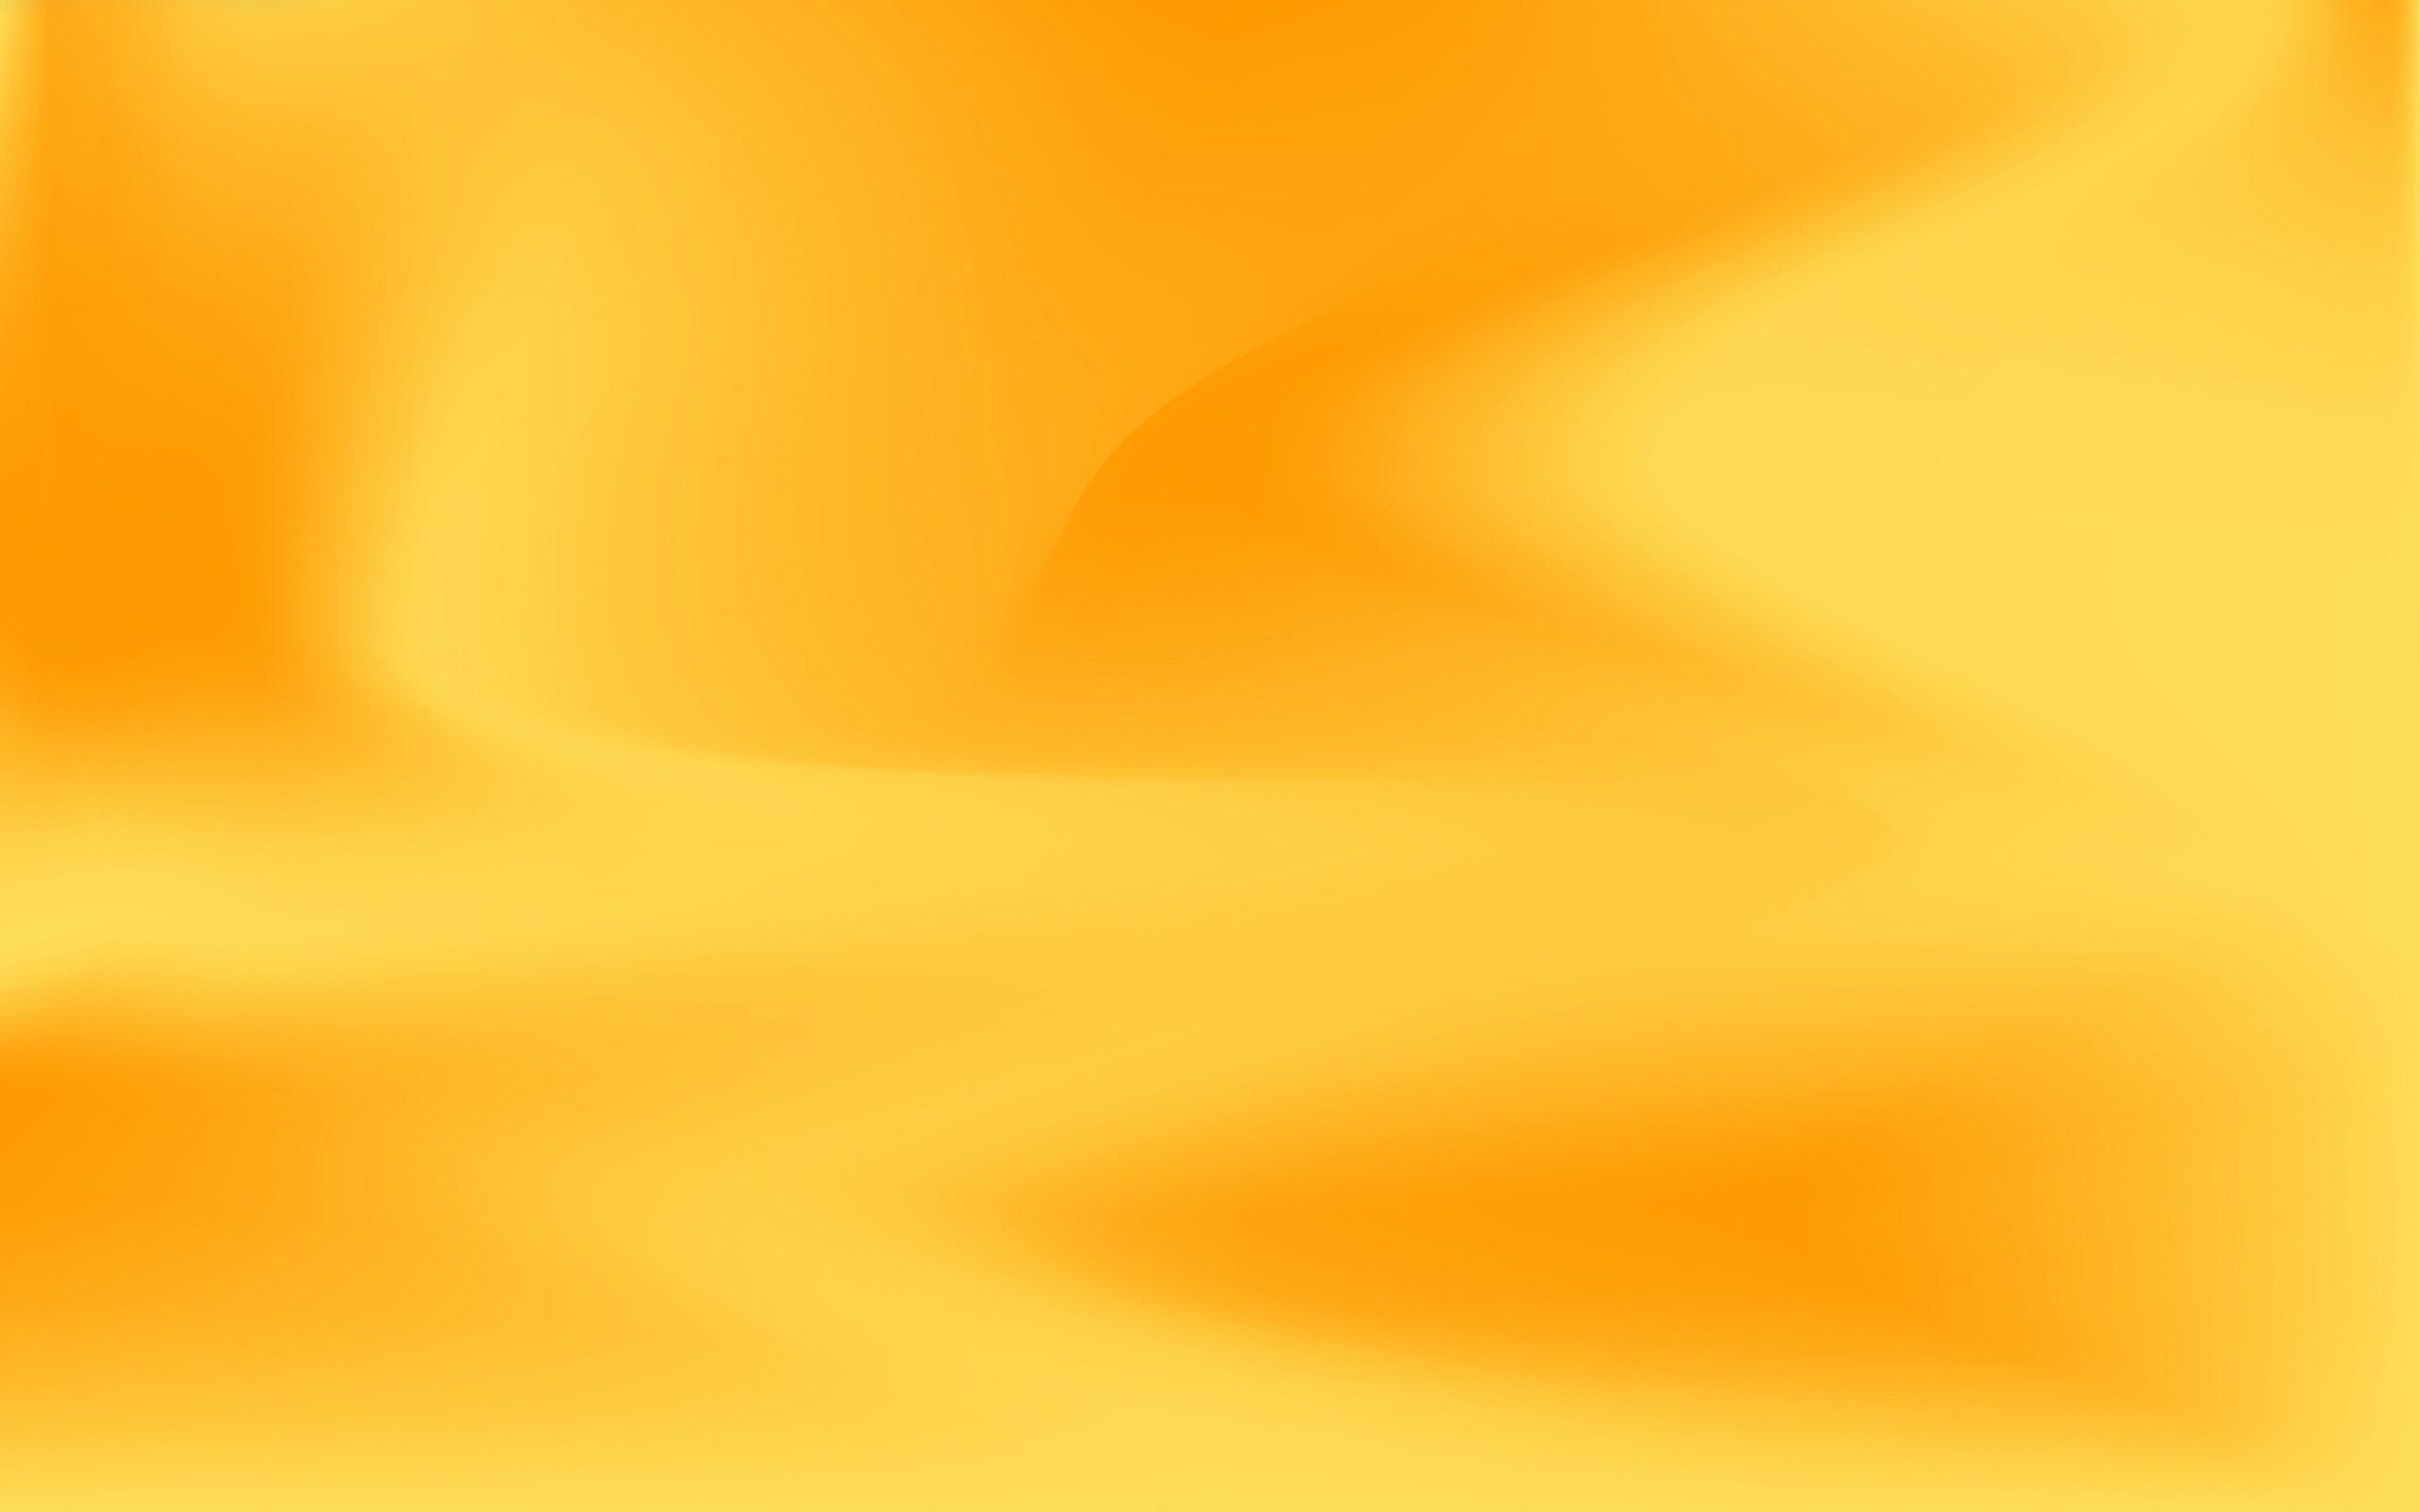 Cool Orange Background